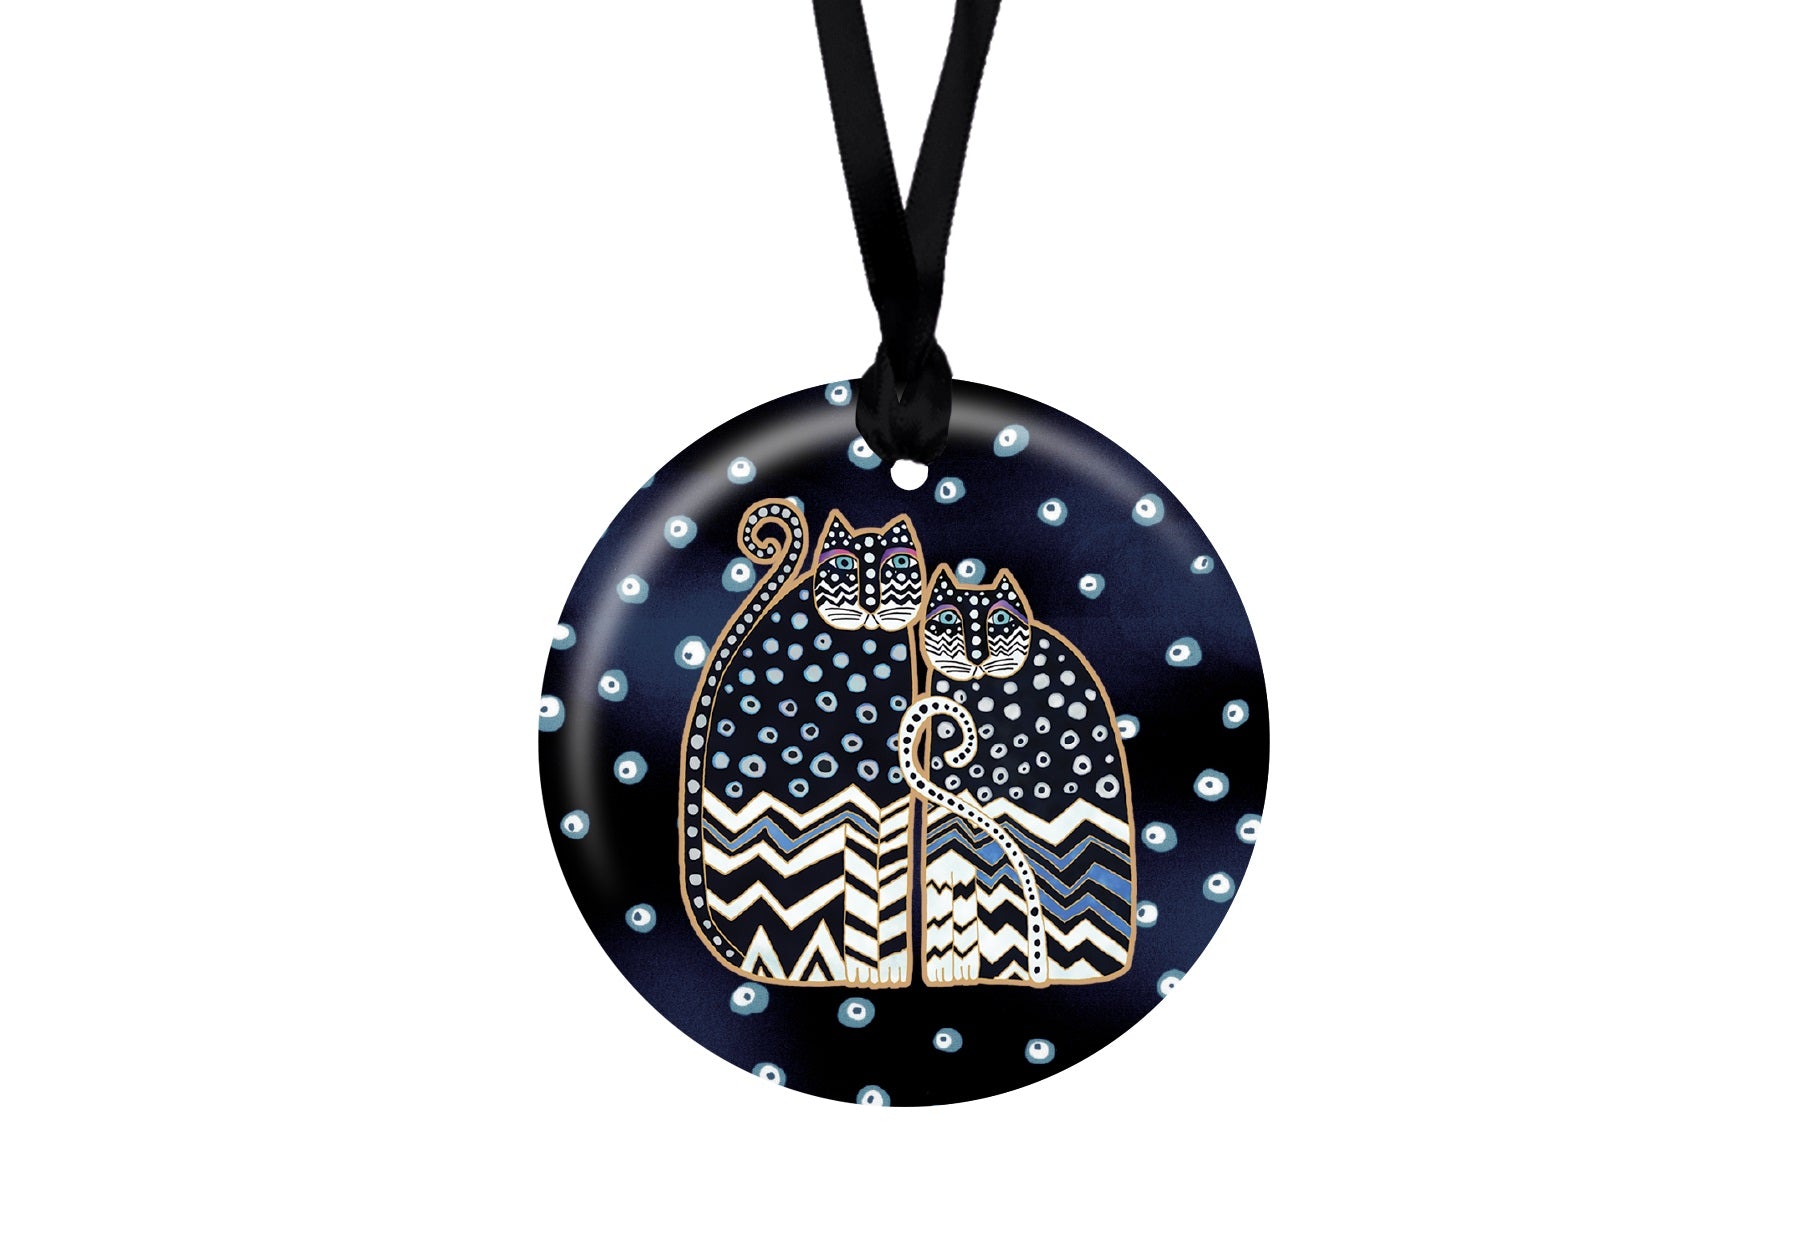 Laurel Burch's Polka Dot Gatos Year-round Keepsake Ornament